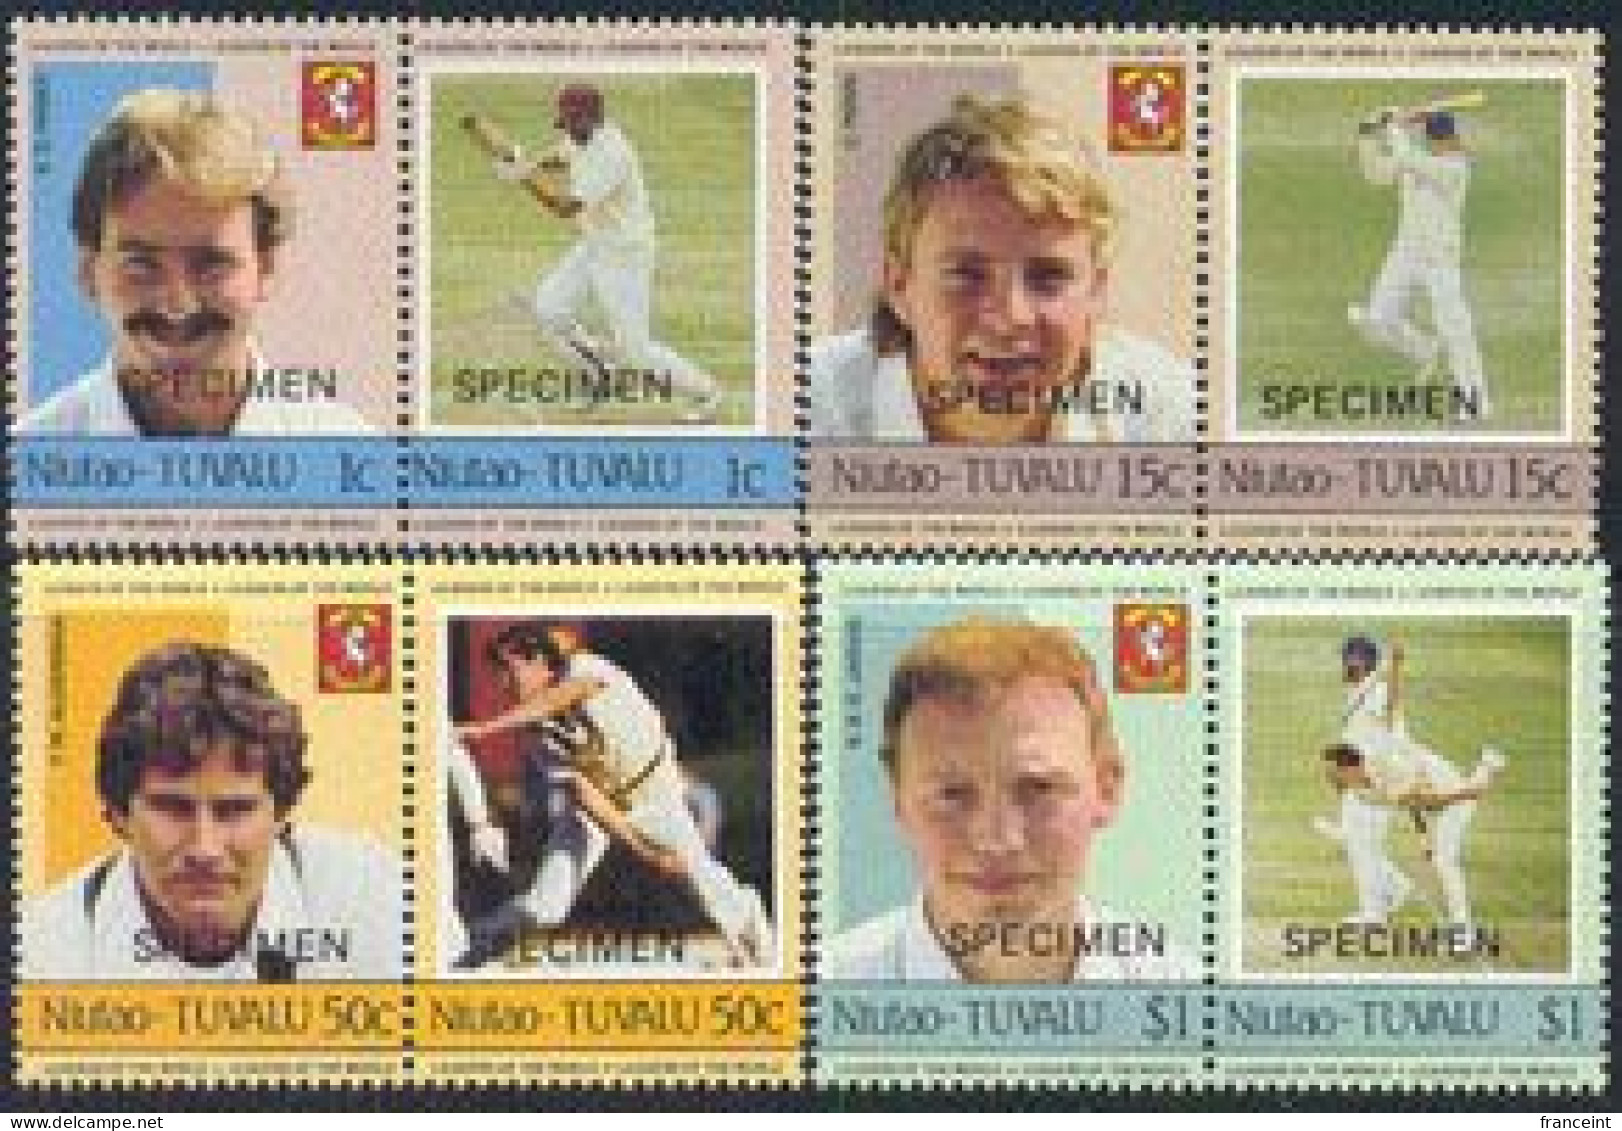 TUVALU (Niutao)(1985) Cricket Players. Set Of 4 Se-tenant Pairs Overprinted SPECIMEN. Scott Nos 21-4. - Cricket